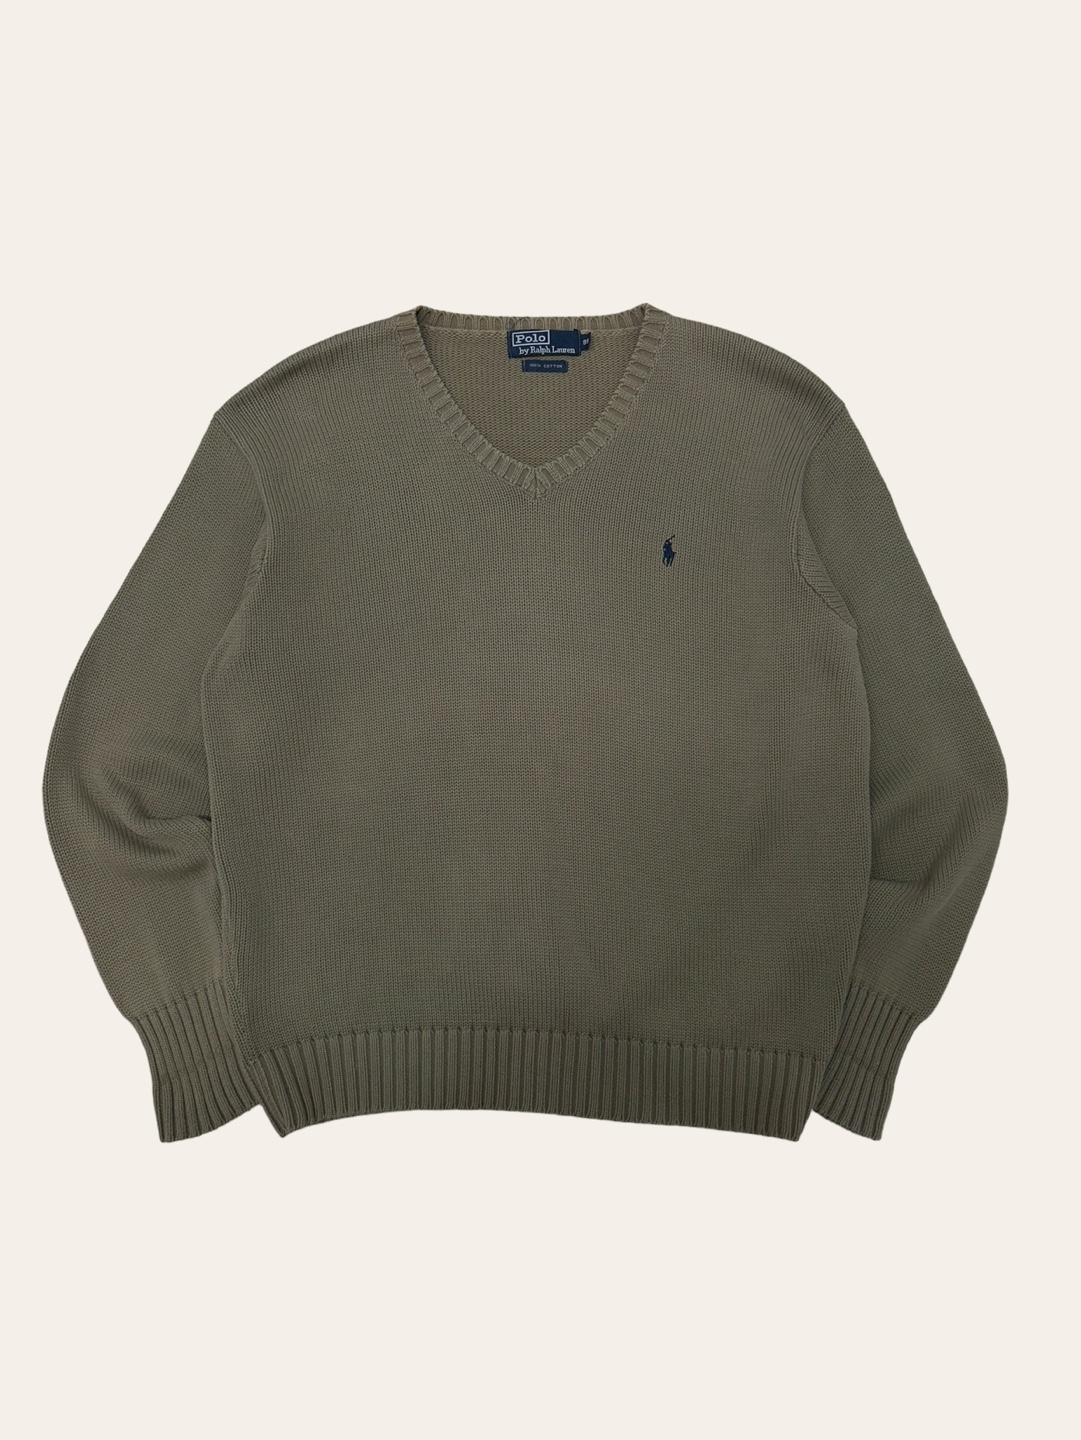 Polo ralph lauren khaki cotton v-neck sweater 95